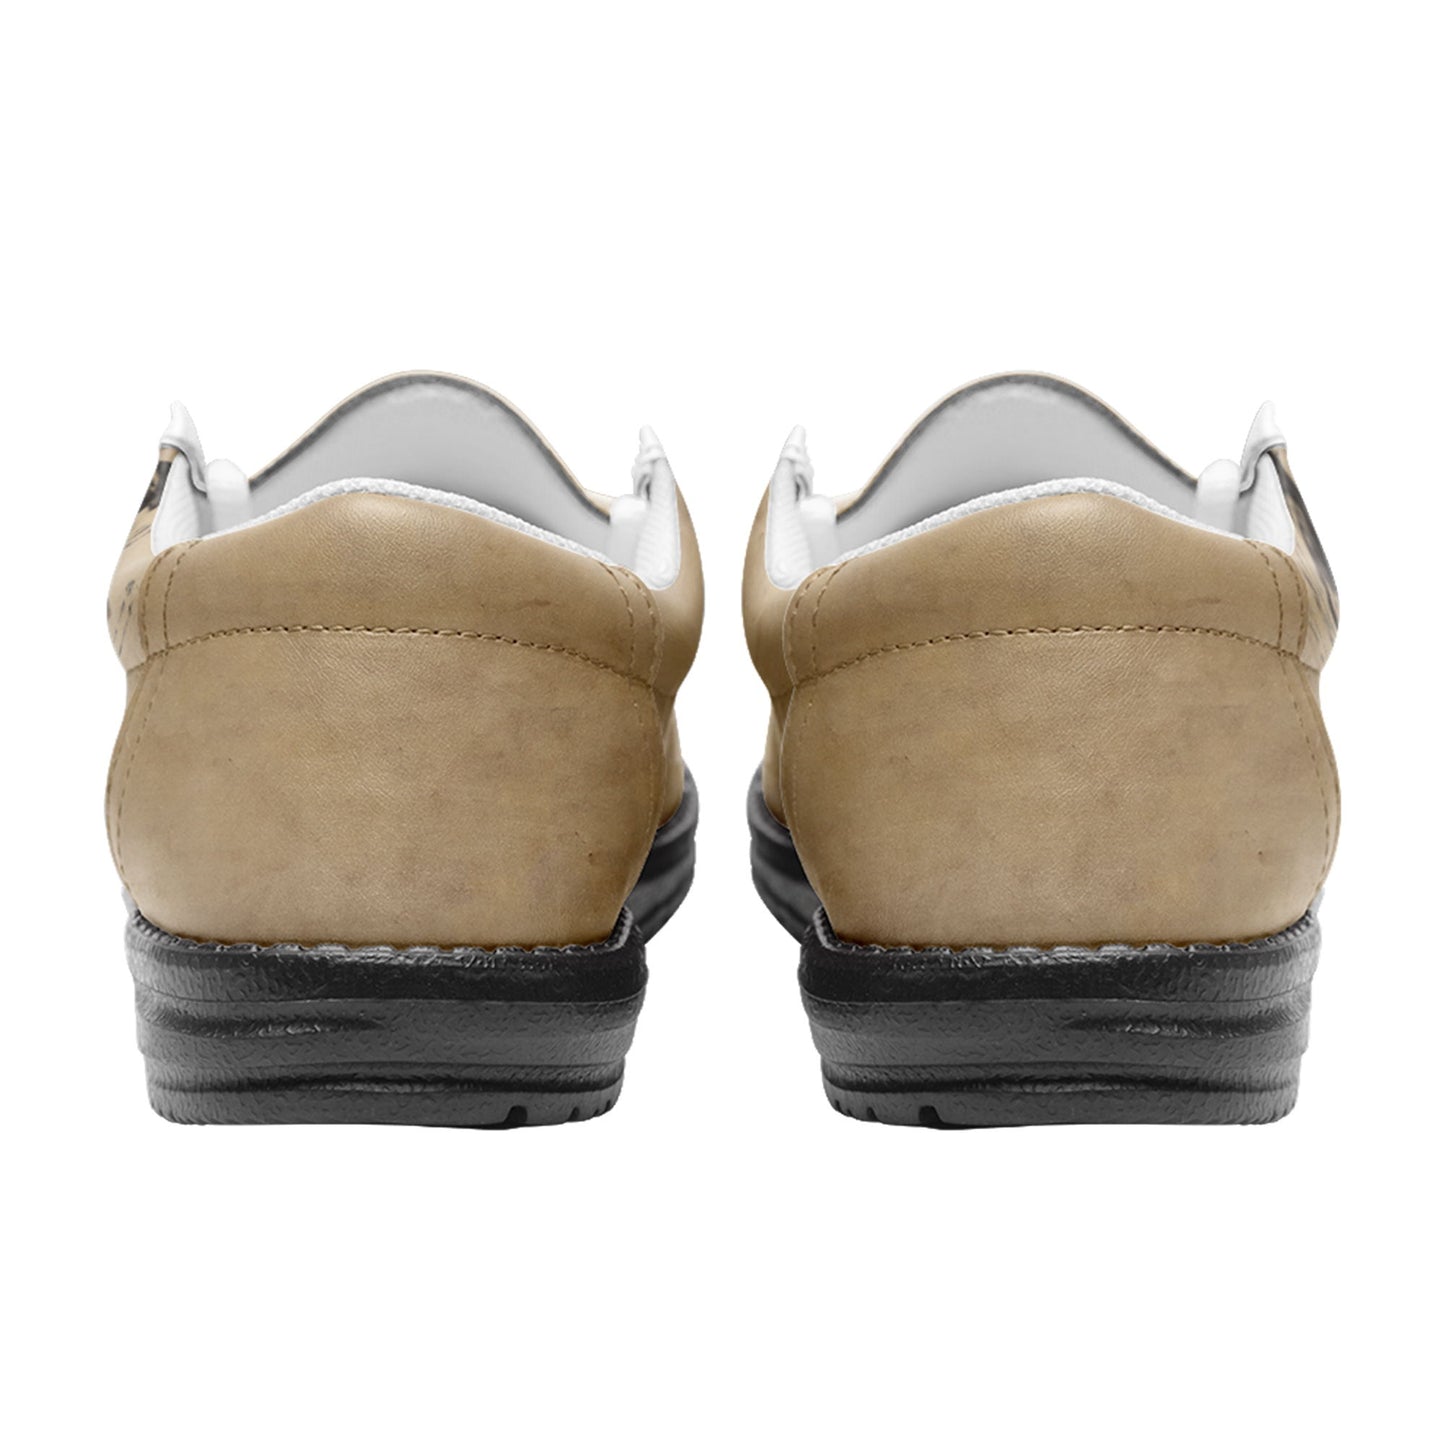 customize printed yo bro shoes ukiyo-e three beauties of the present day gray casual shoes white shoelace 5